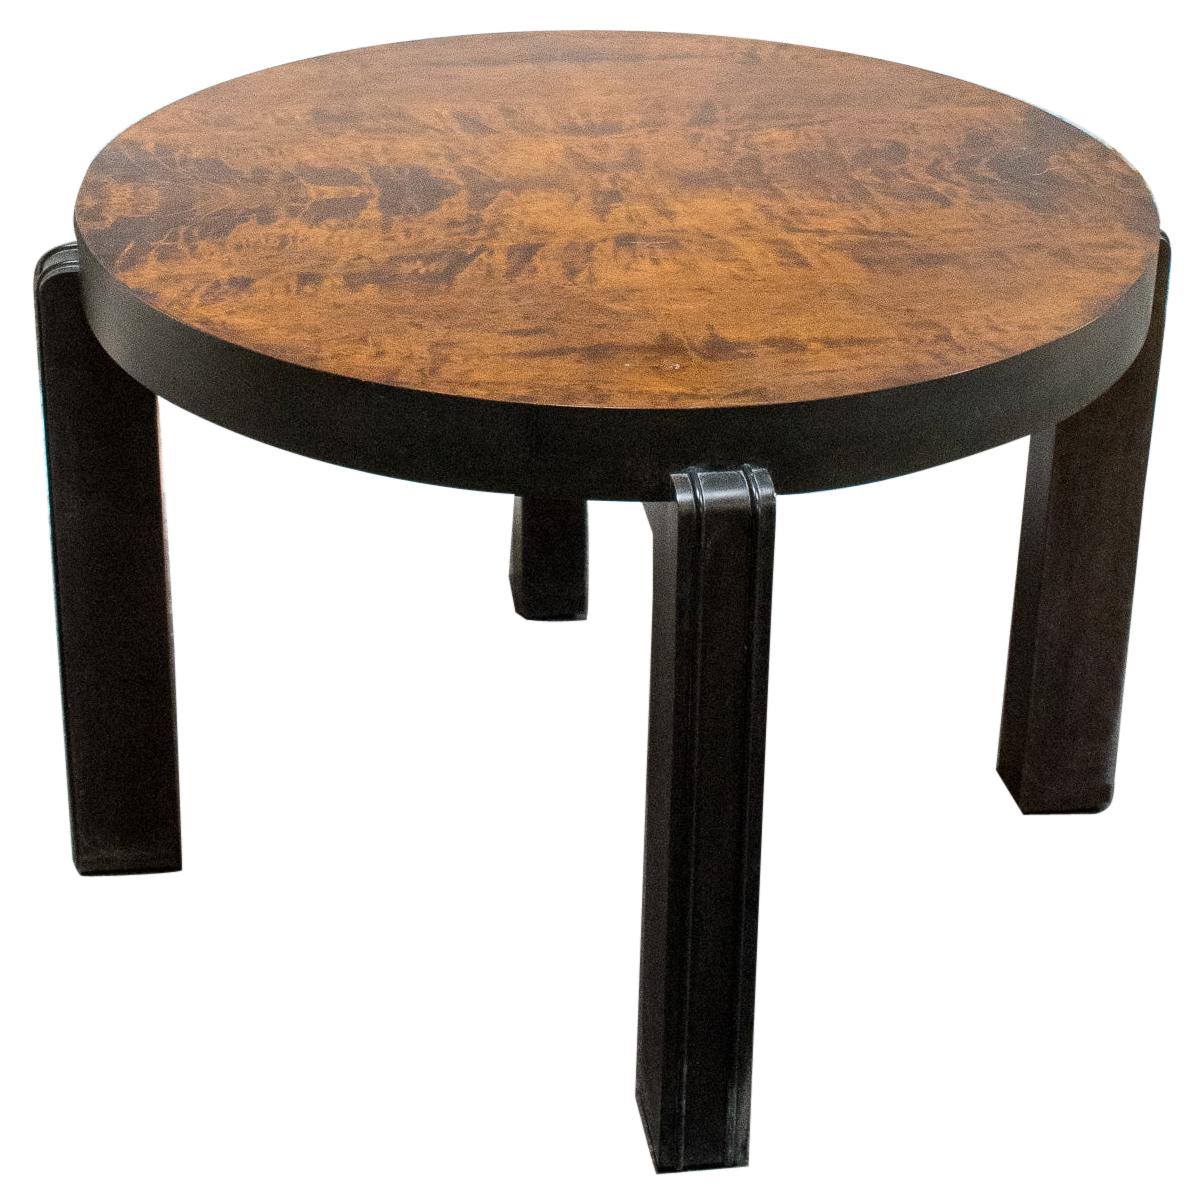 Round Art Deco Coffee Table in Dark Flame Birch